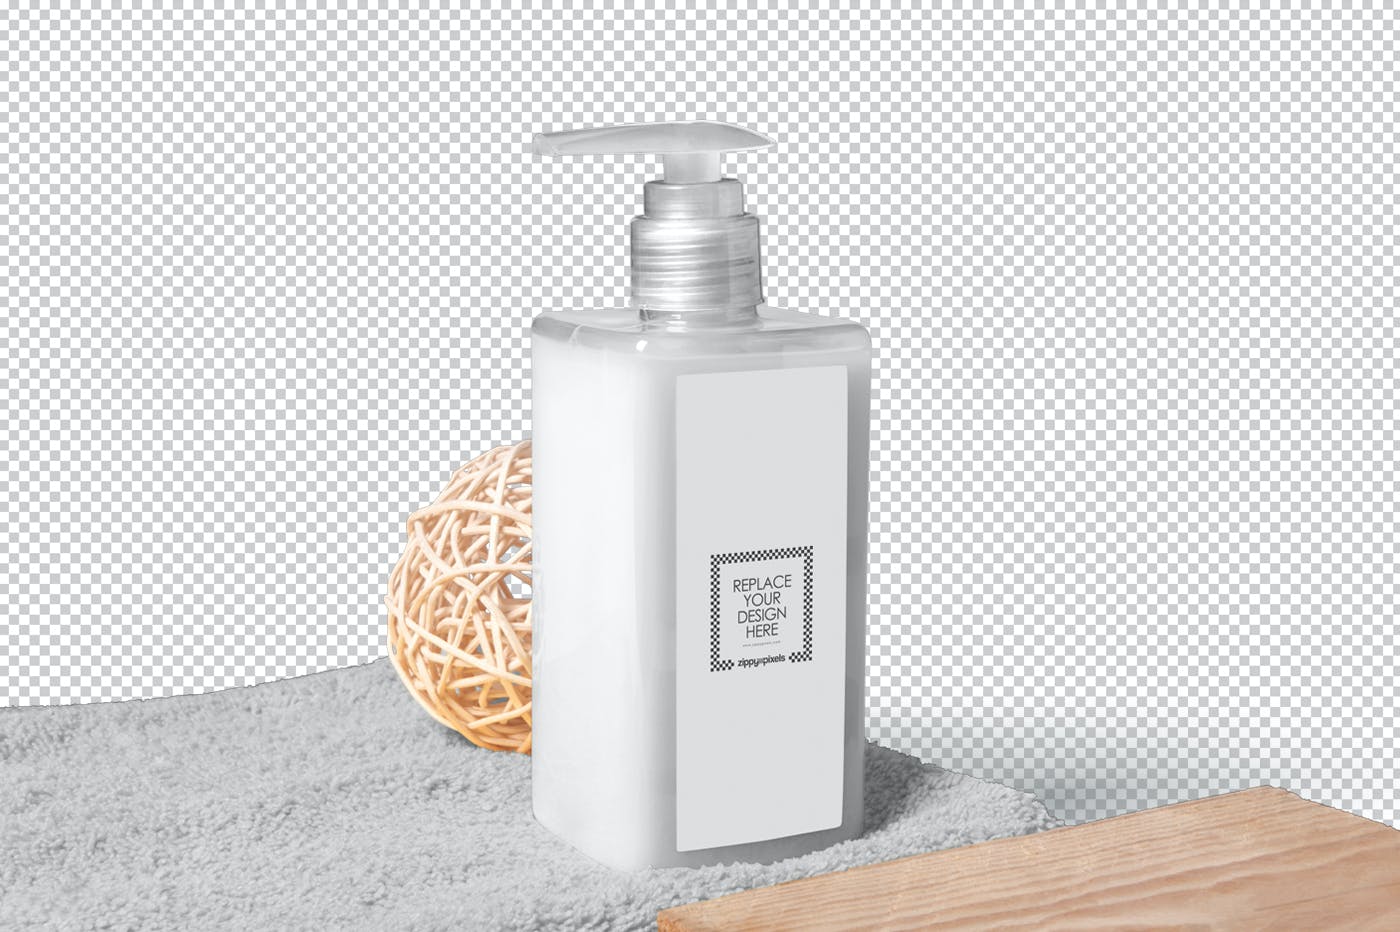 洗手液/沐浴露/洗发水分发瓶样机模板 Soap and Hand Sanitizer Dispenser Bottle Mockups设计素材模板